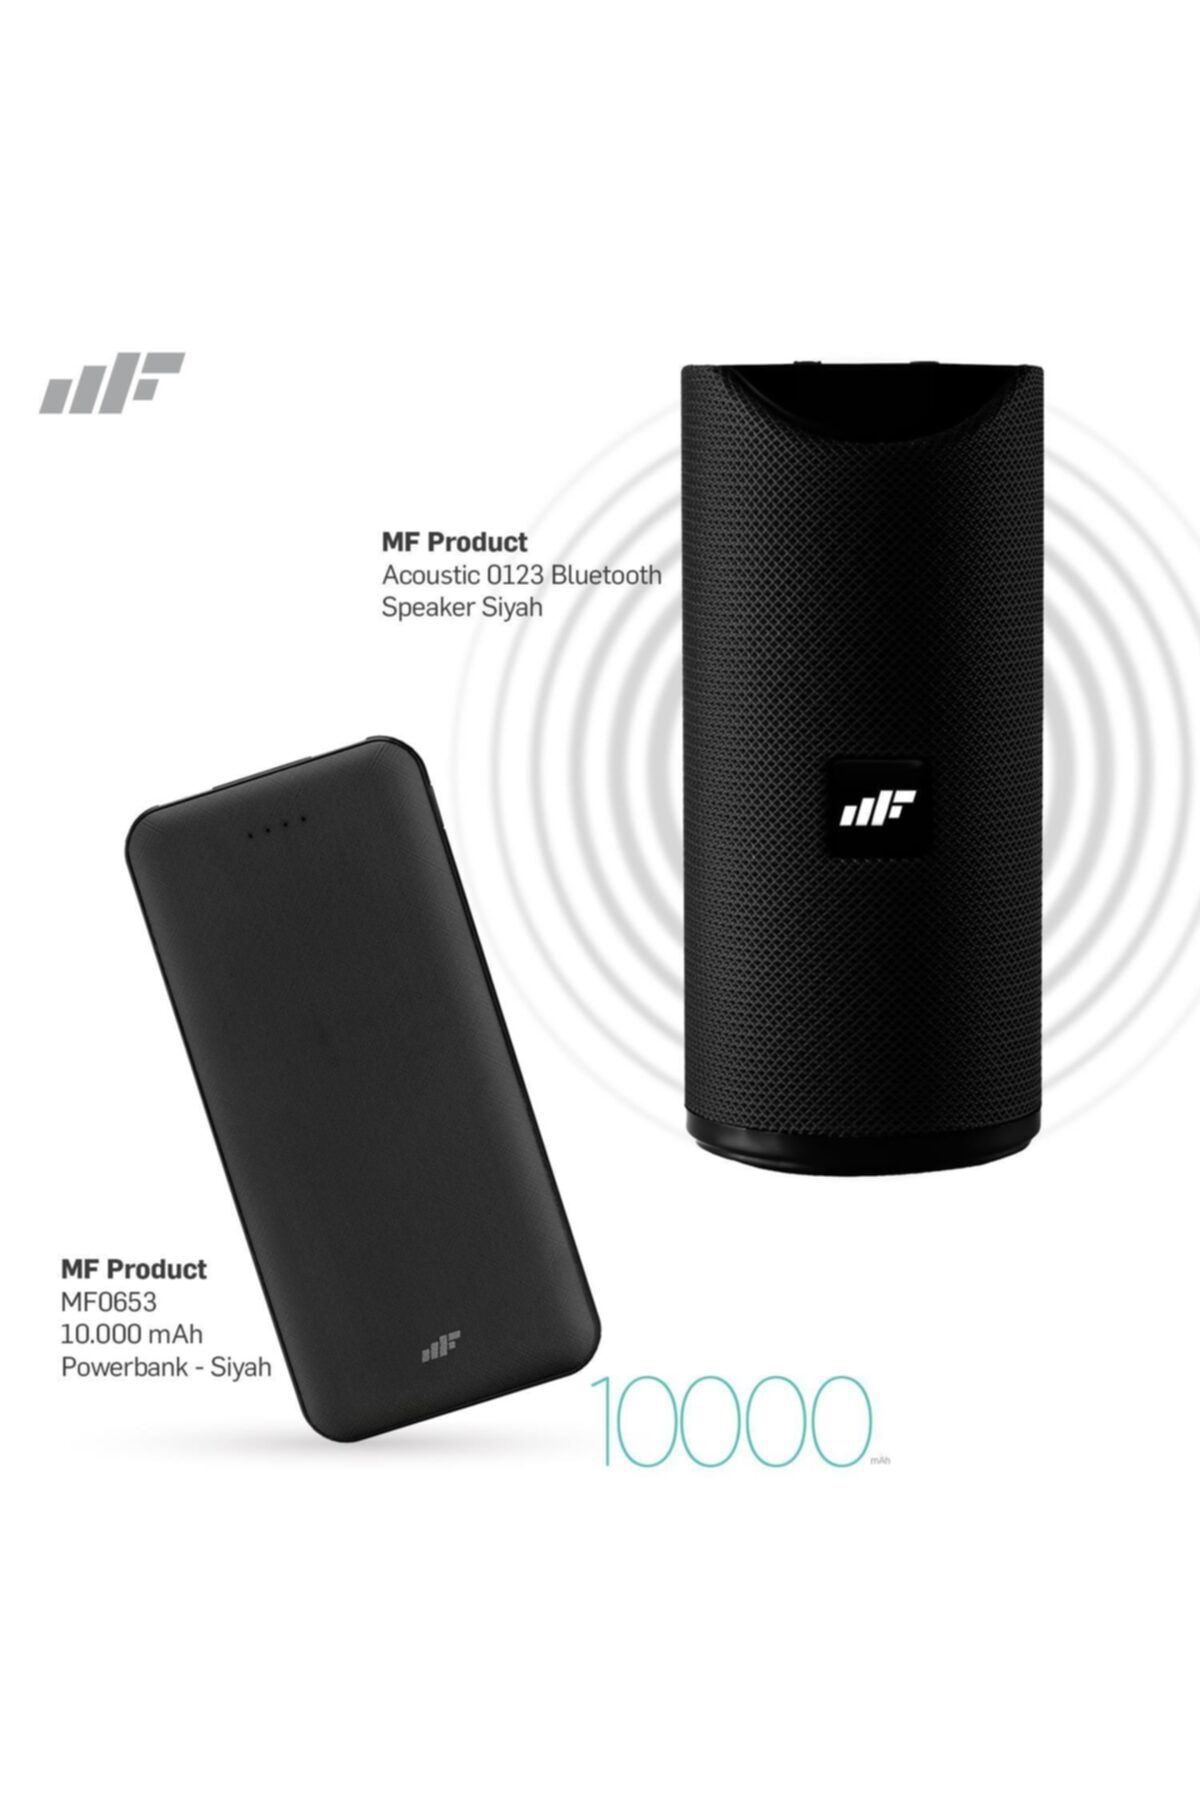 MF PRODUCT Acoustic 0123 Bluetooth Hoparlör Siyah + 0653 10000 Mah Powerbank - Siyah